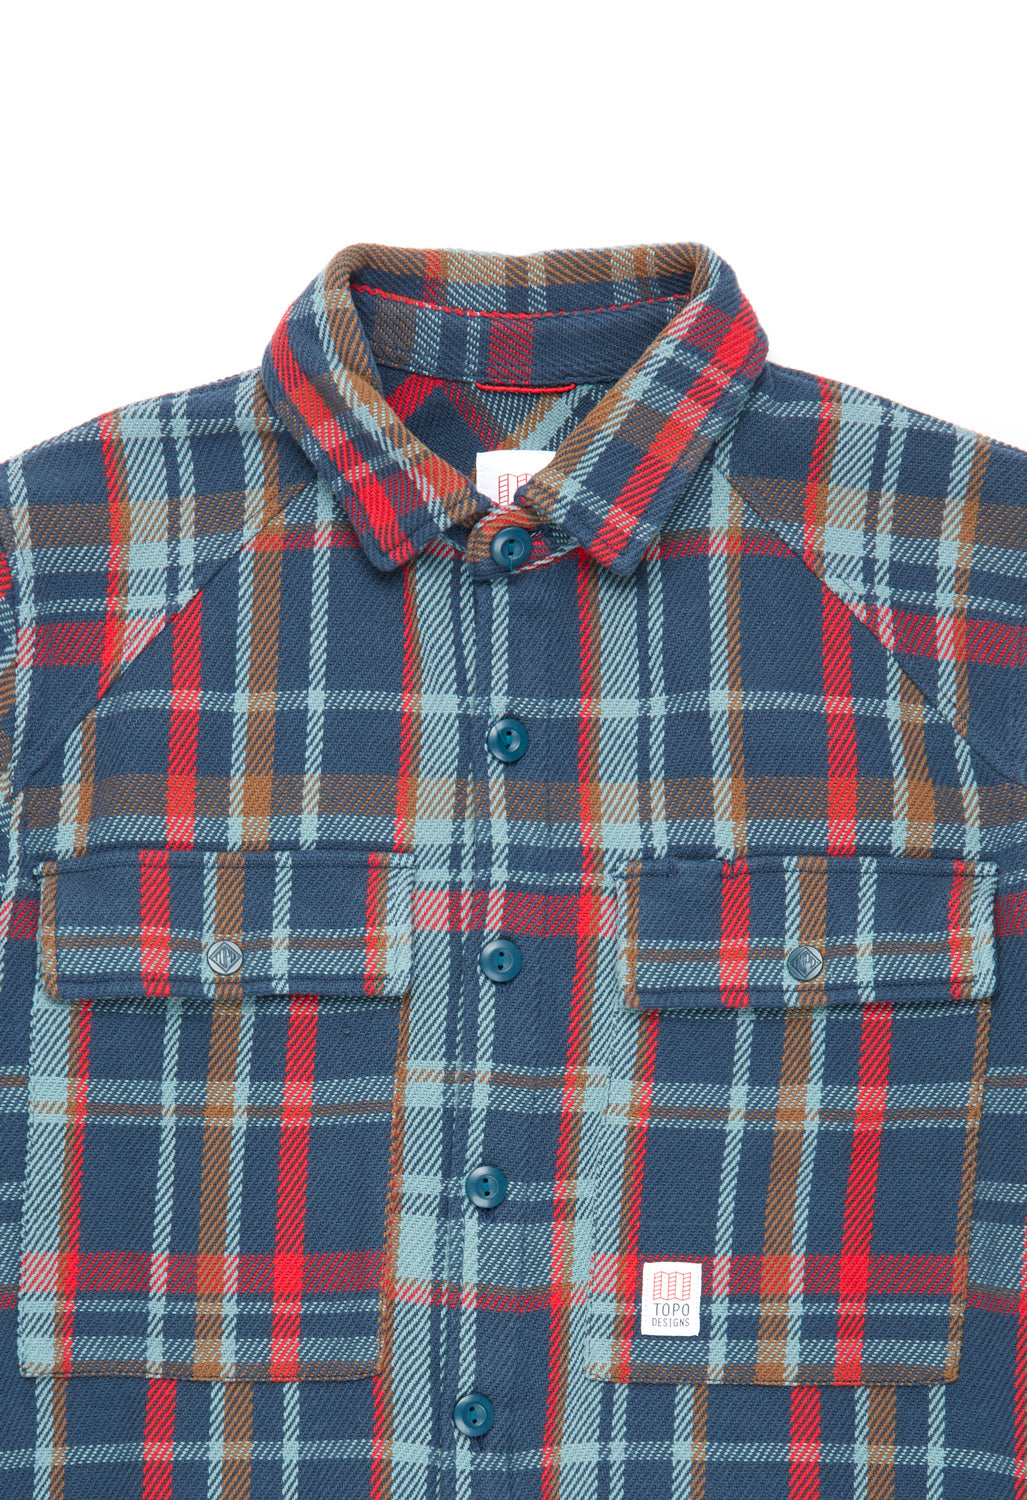 Topo Designs Men's Mountain Shirt Jacket - Pond Blue Multi Plaid